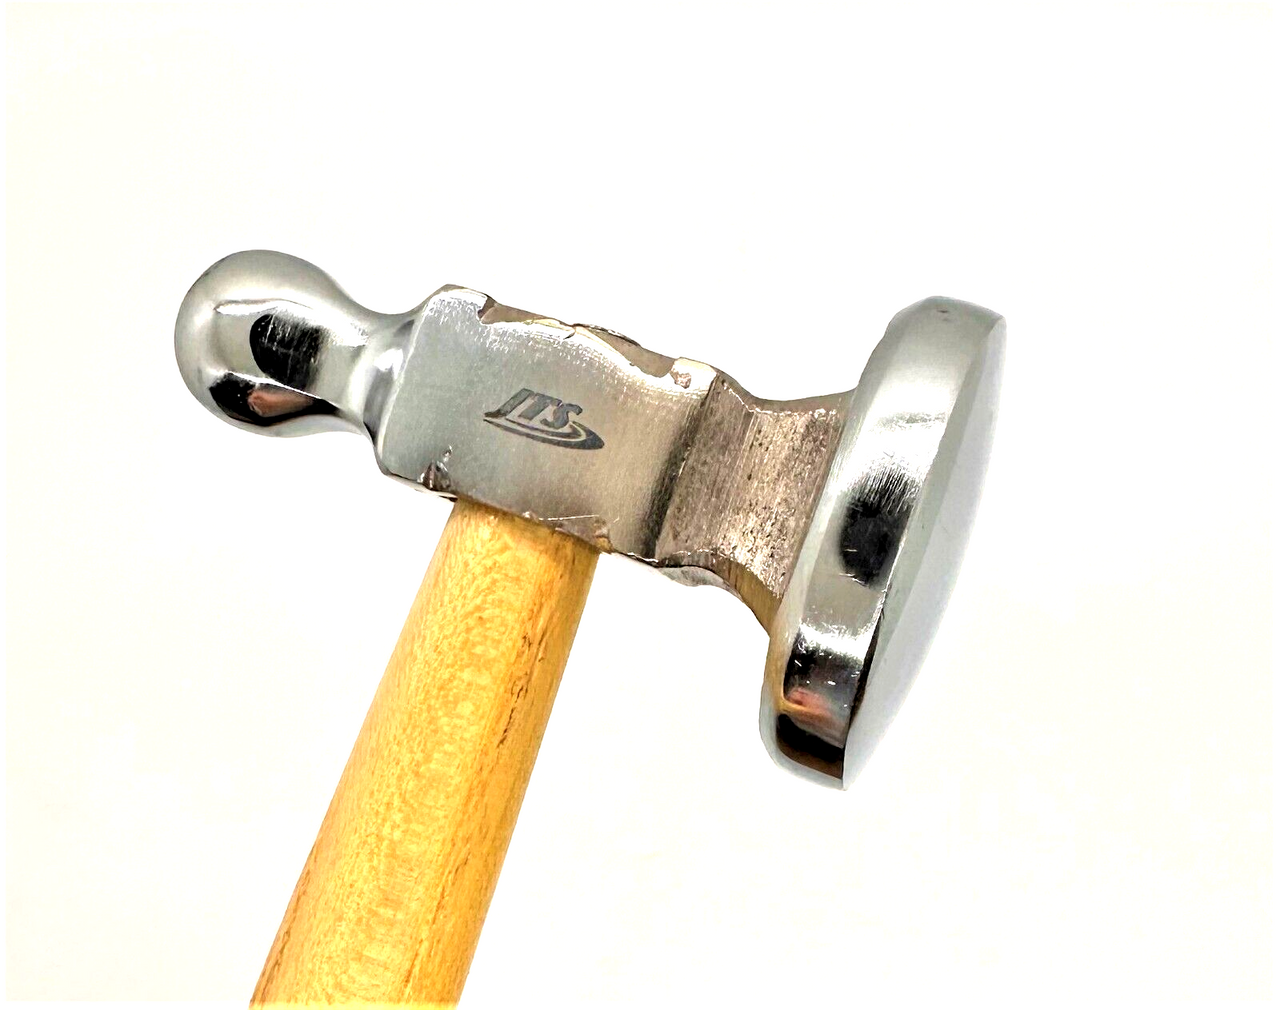 38mm Chasing Hammer Premium Jewelry Making Hammers Bowed Face 1-1/2" Diameter